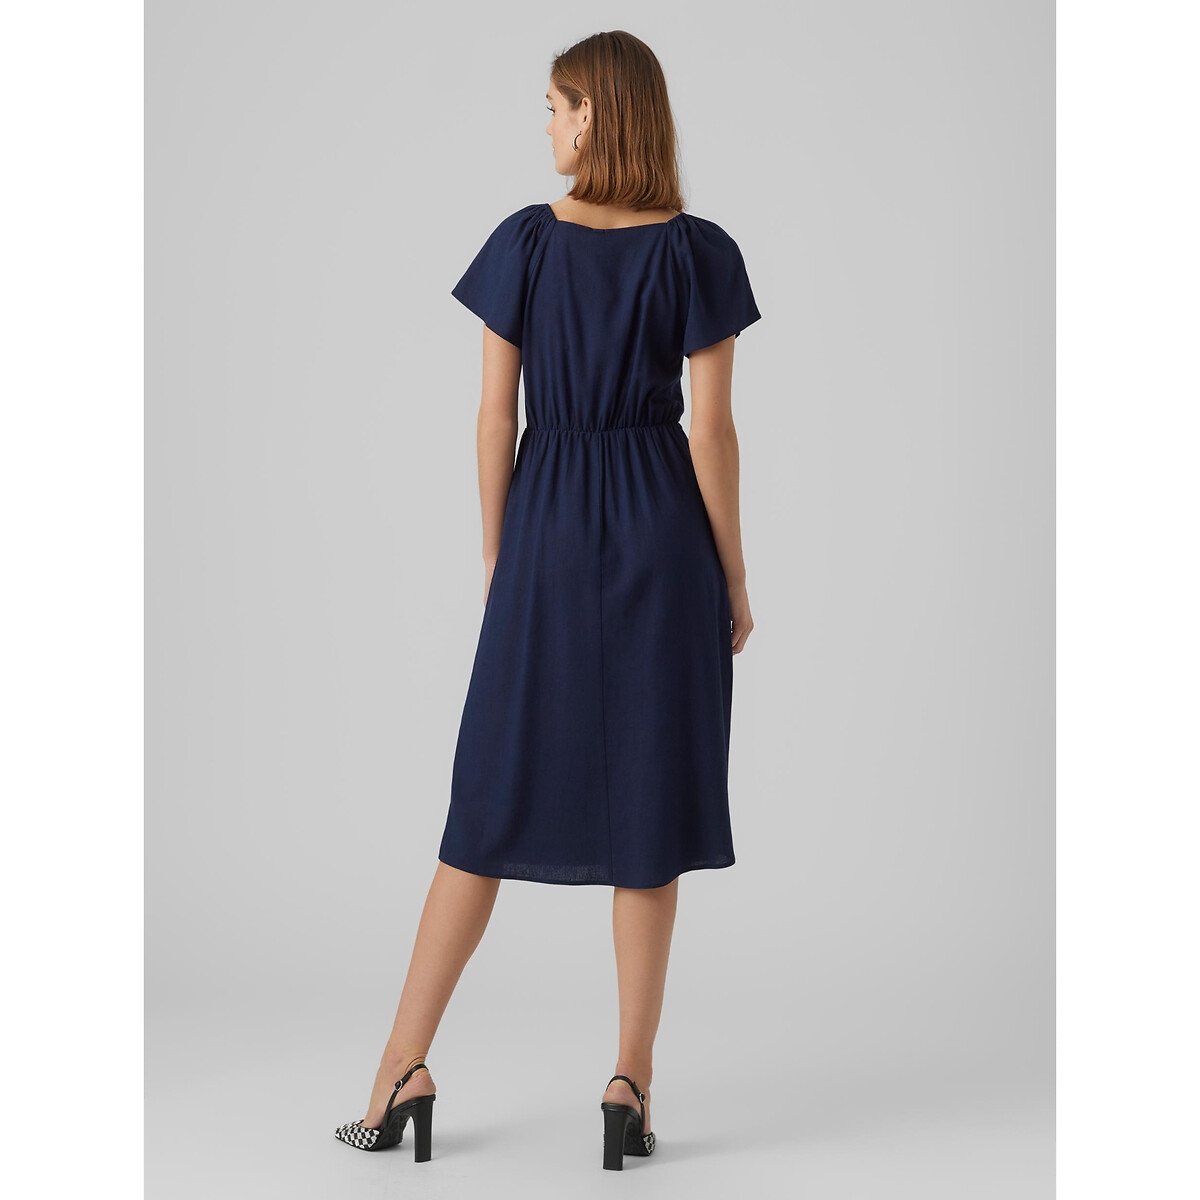 Платье Длинное с короткими рукавами L синий LaRedoute, размер L - фото 4